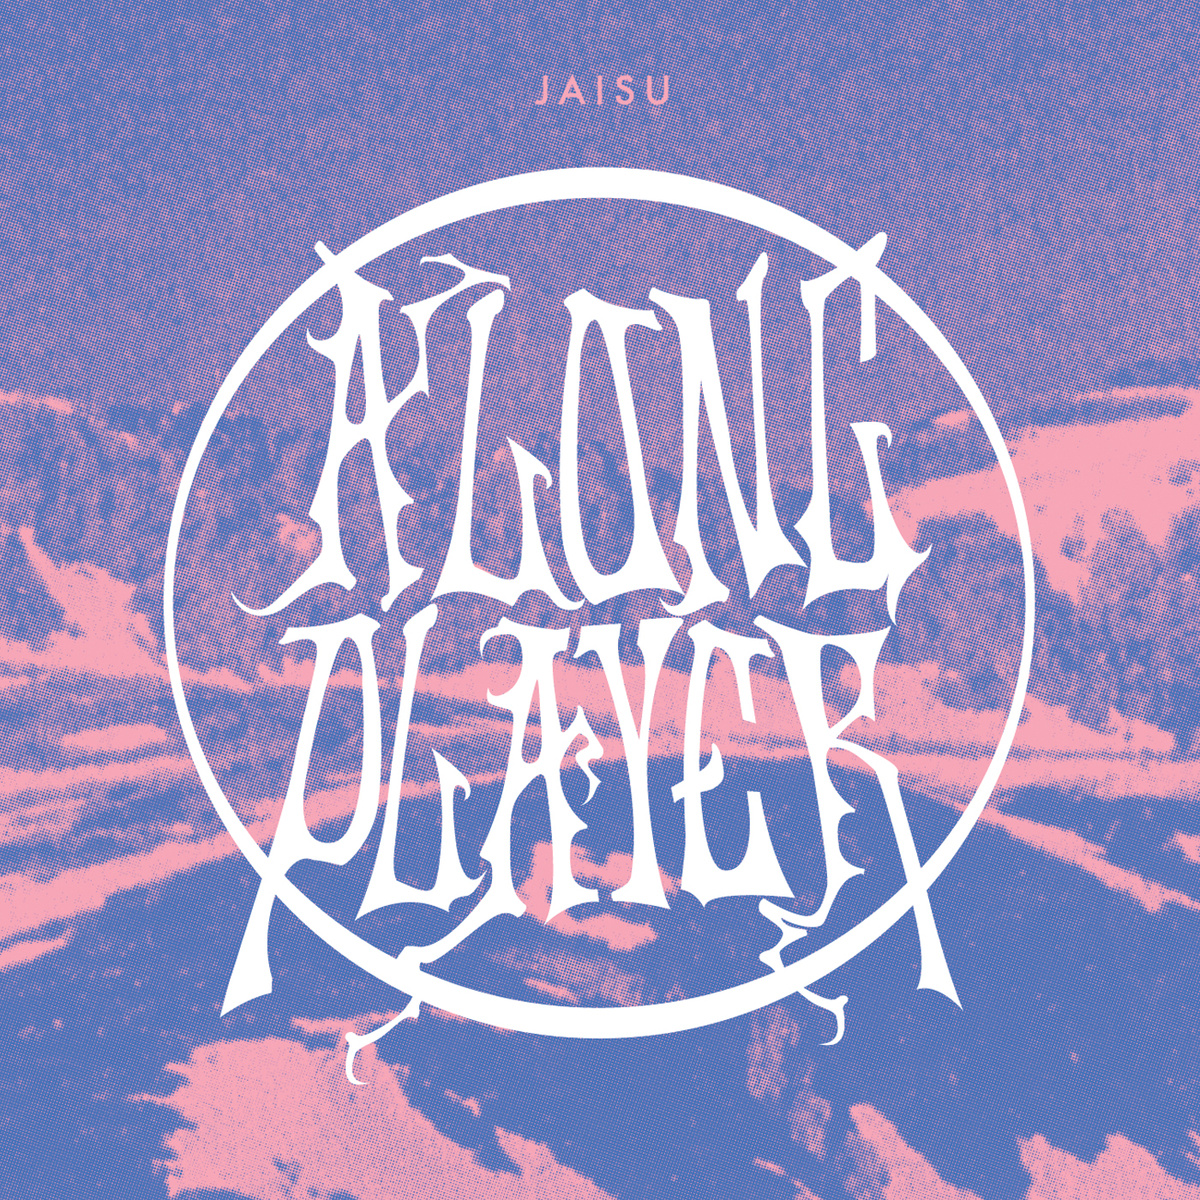 Jaisu - "A Long Player" (Release) | @jaisu @ASTRAL_BLACK